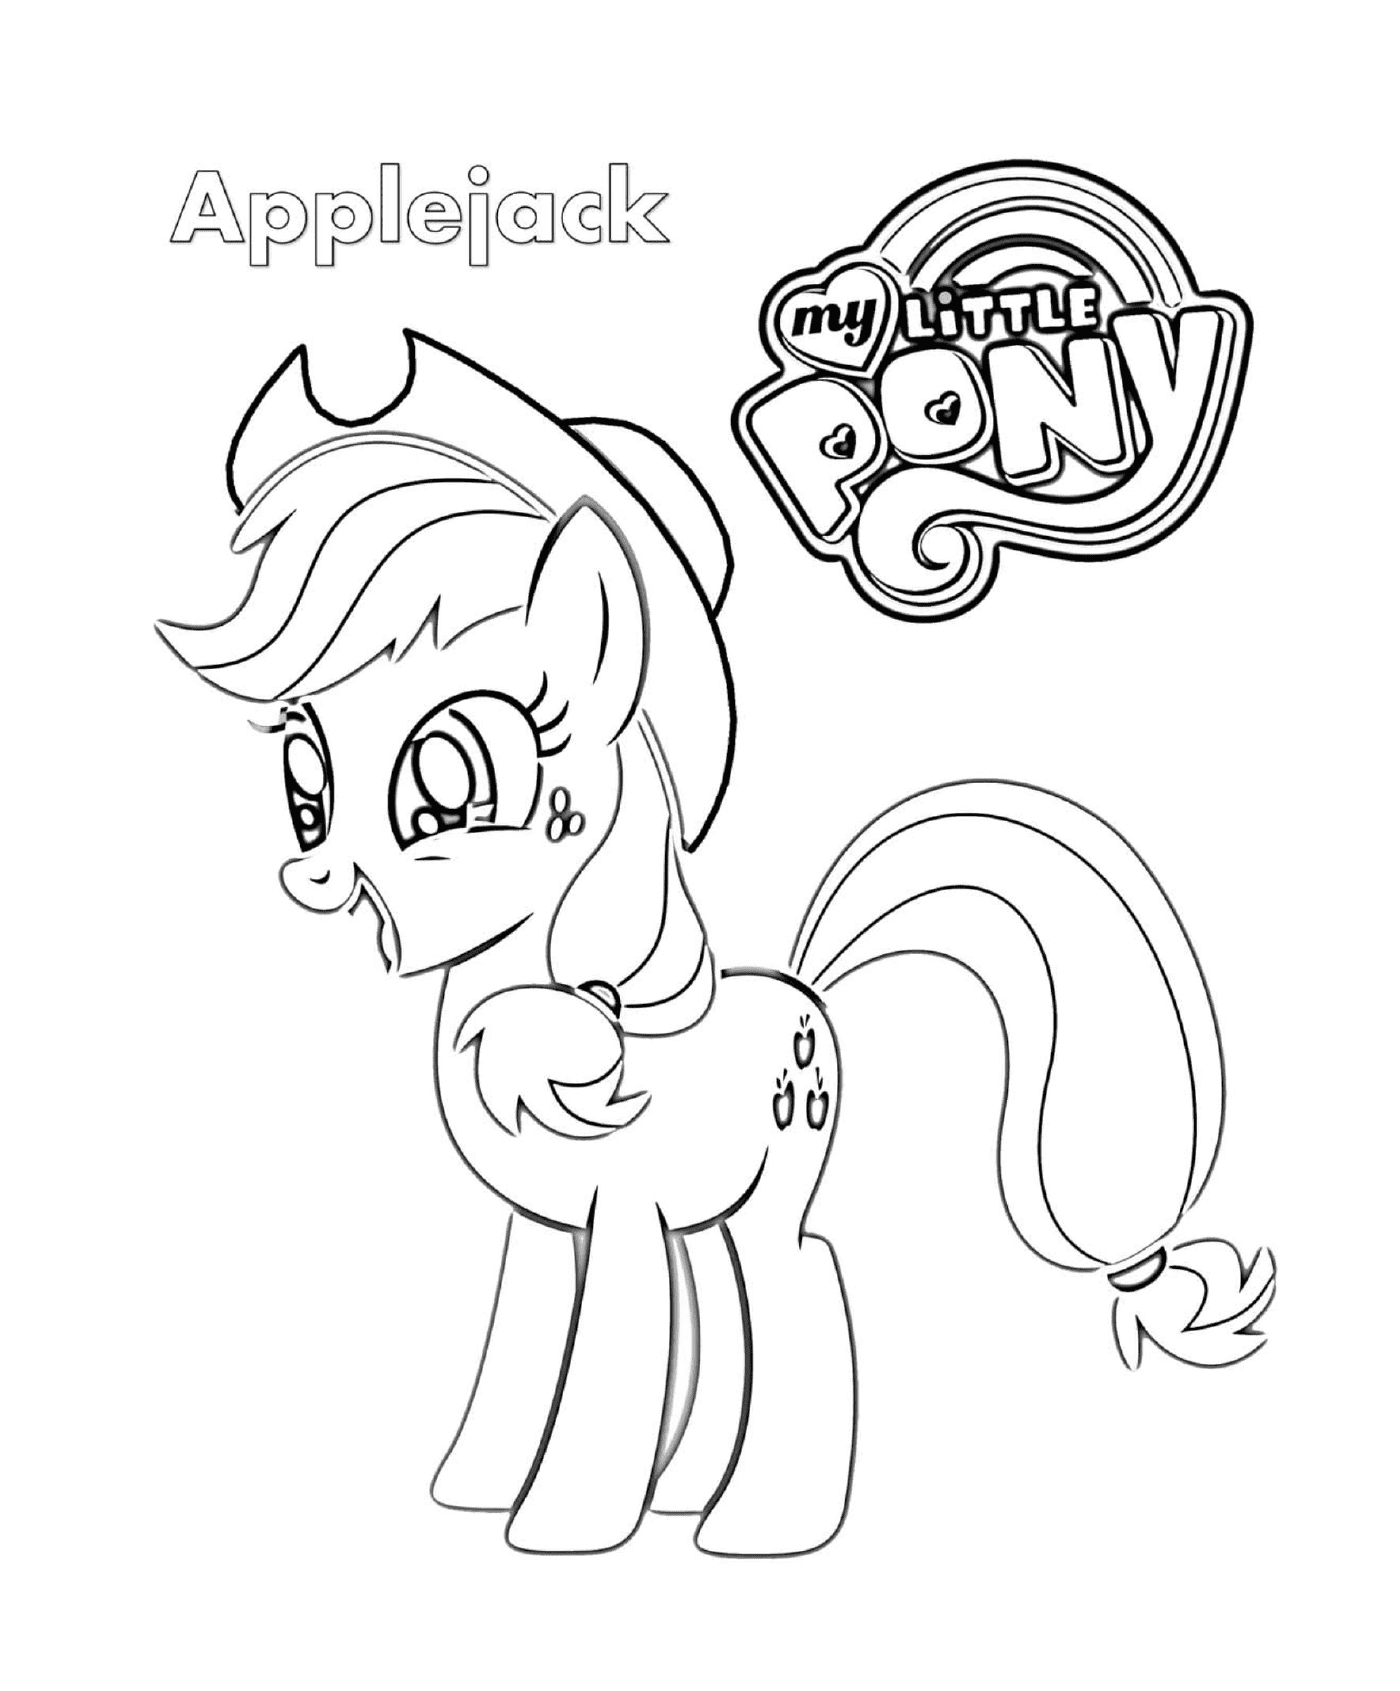  Applejack, un pony lindo 